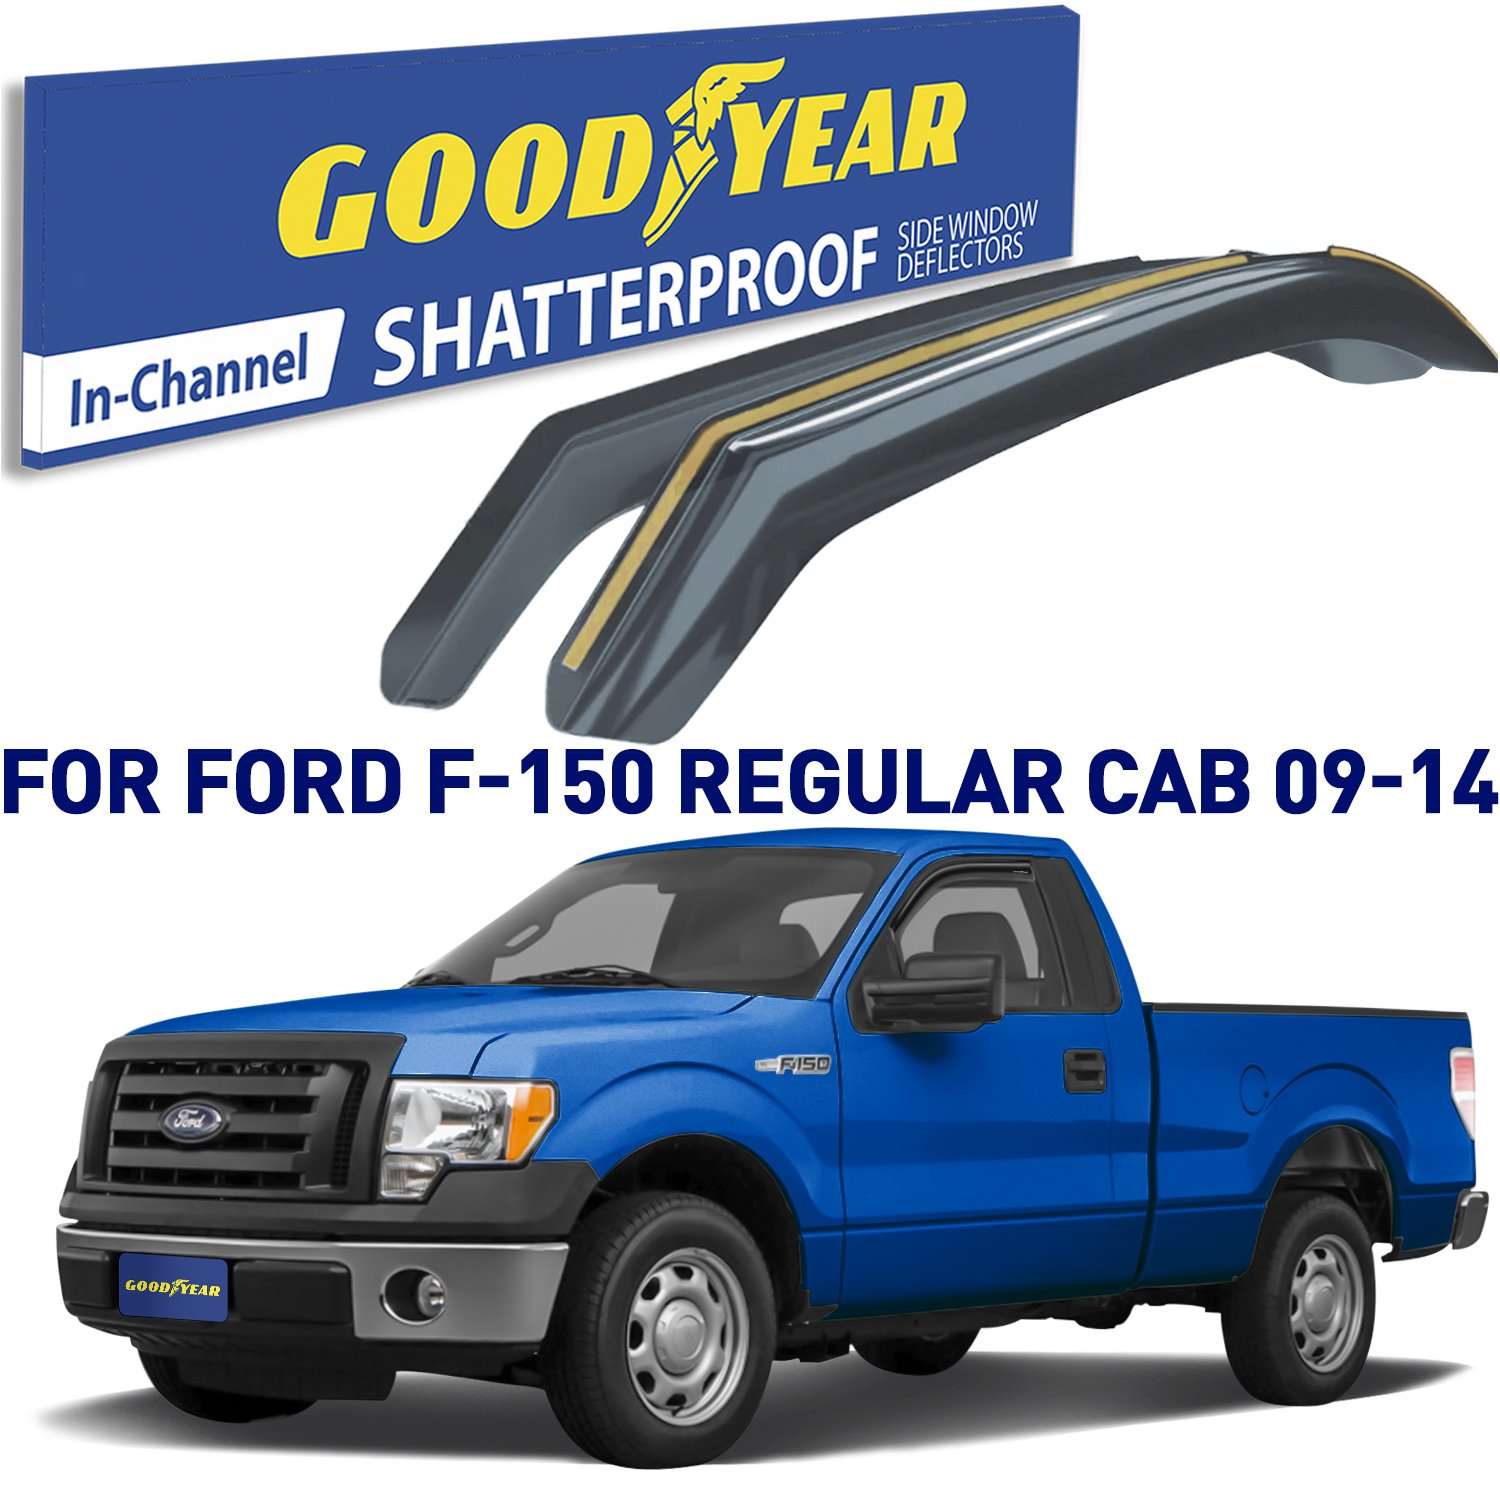 Goodyear Shatterproof Window Deflectors For 2009-2014 Ford F-150